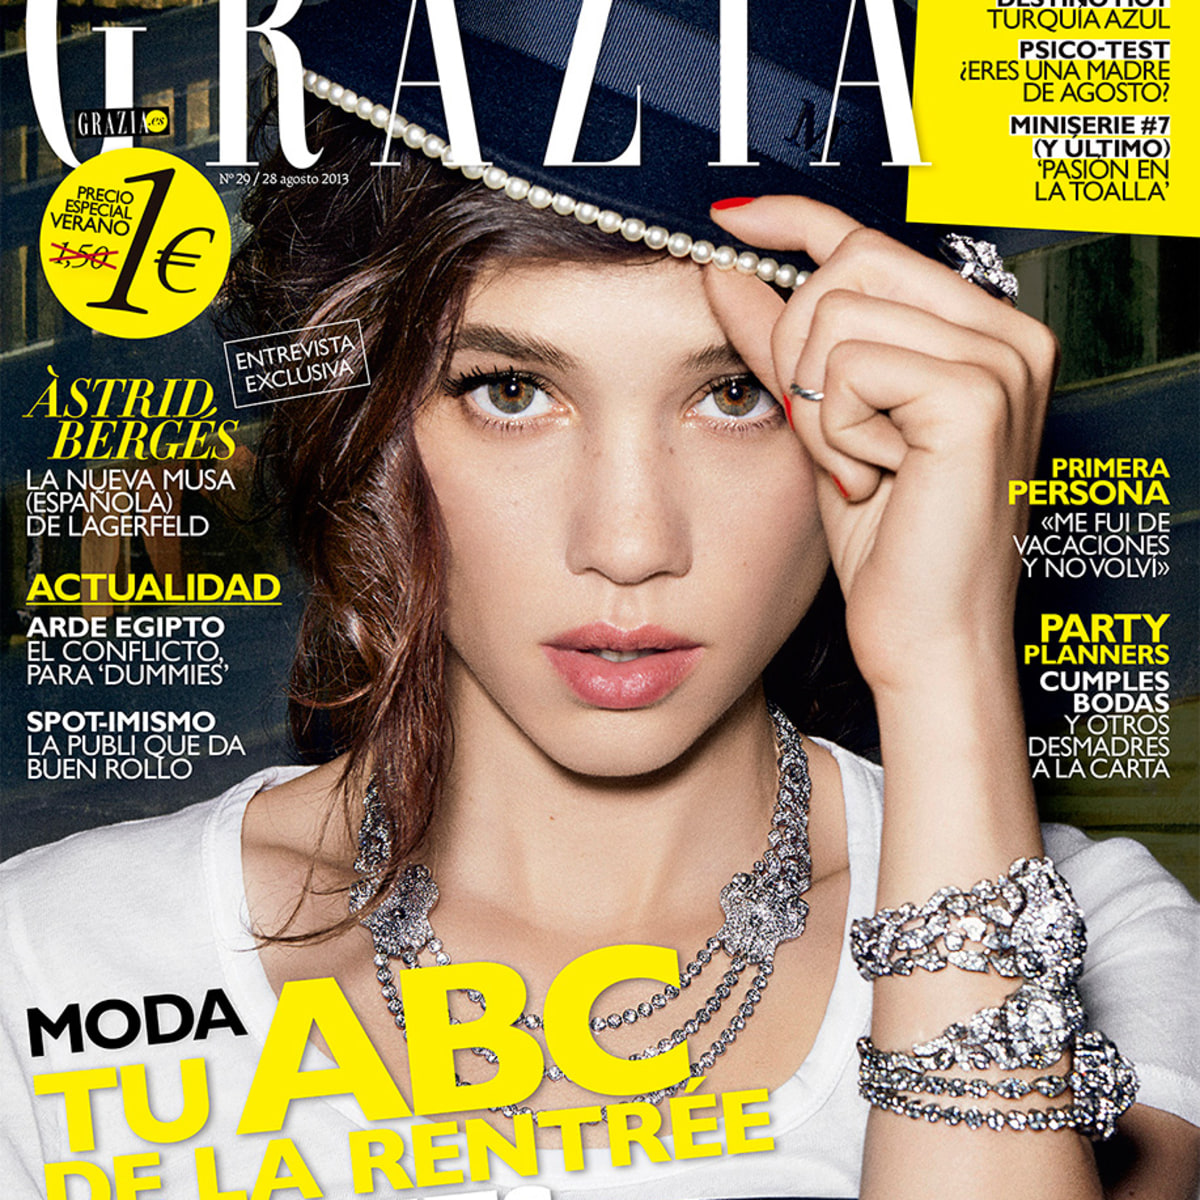 Grazia México Magazine (Digital) Subscription Discount 